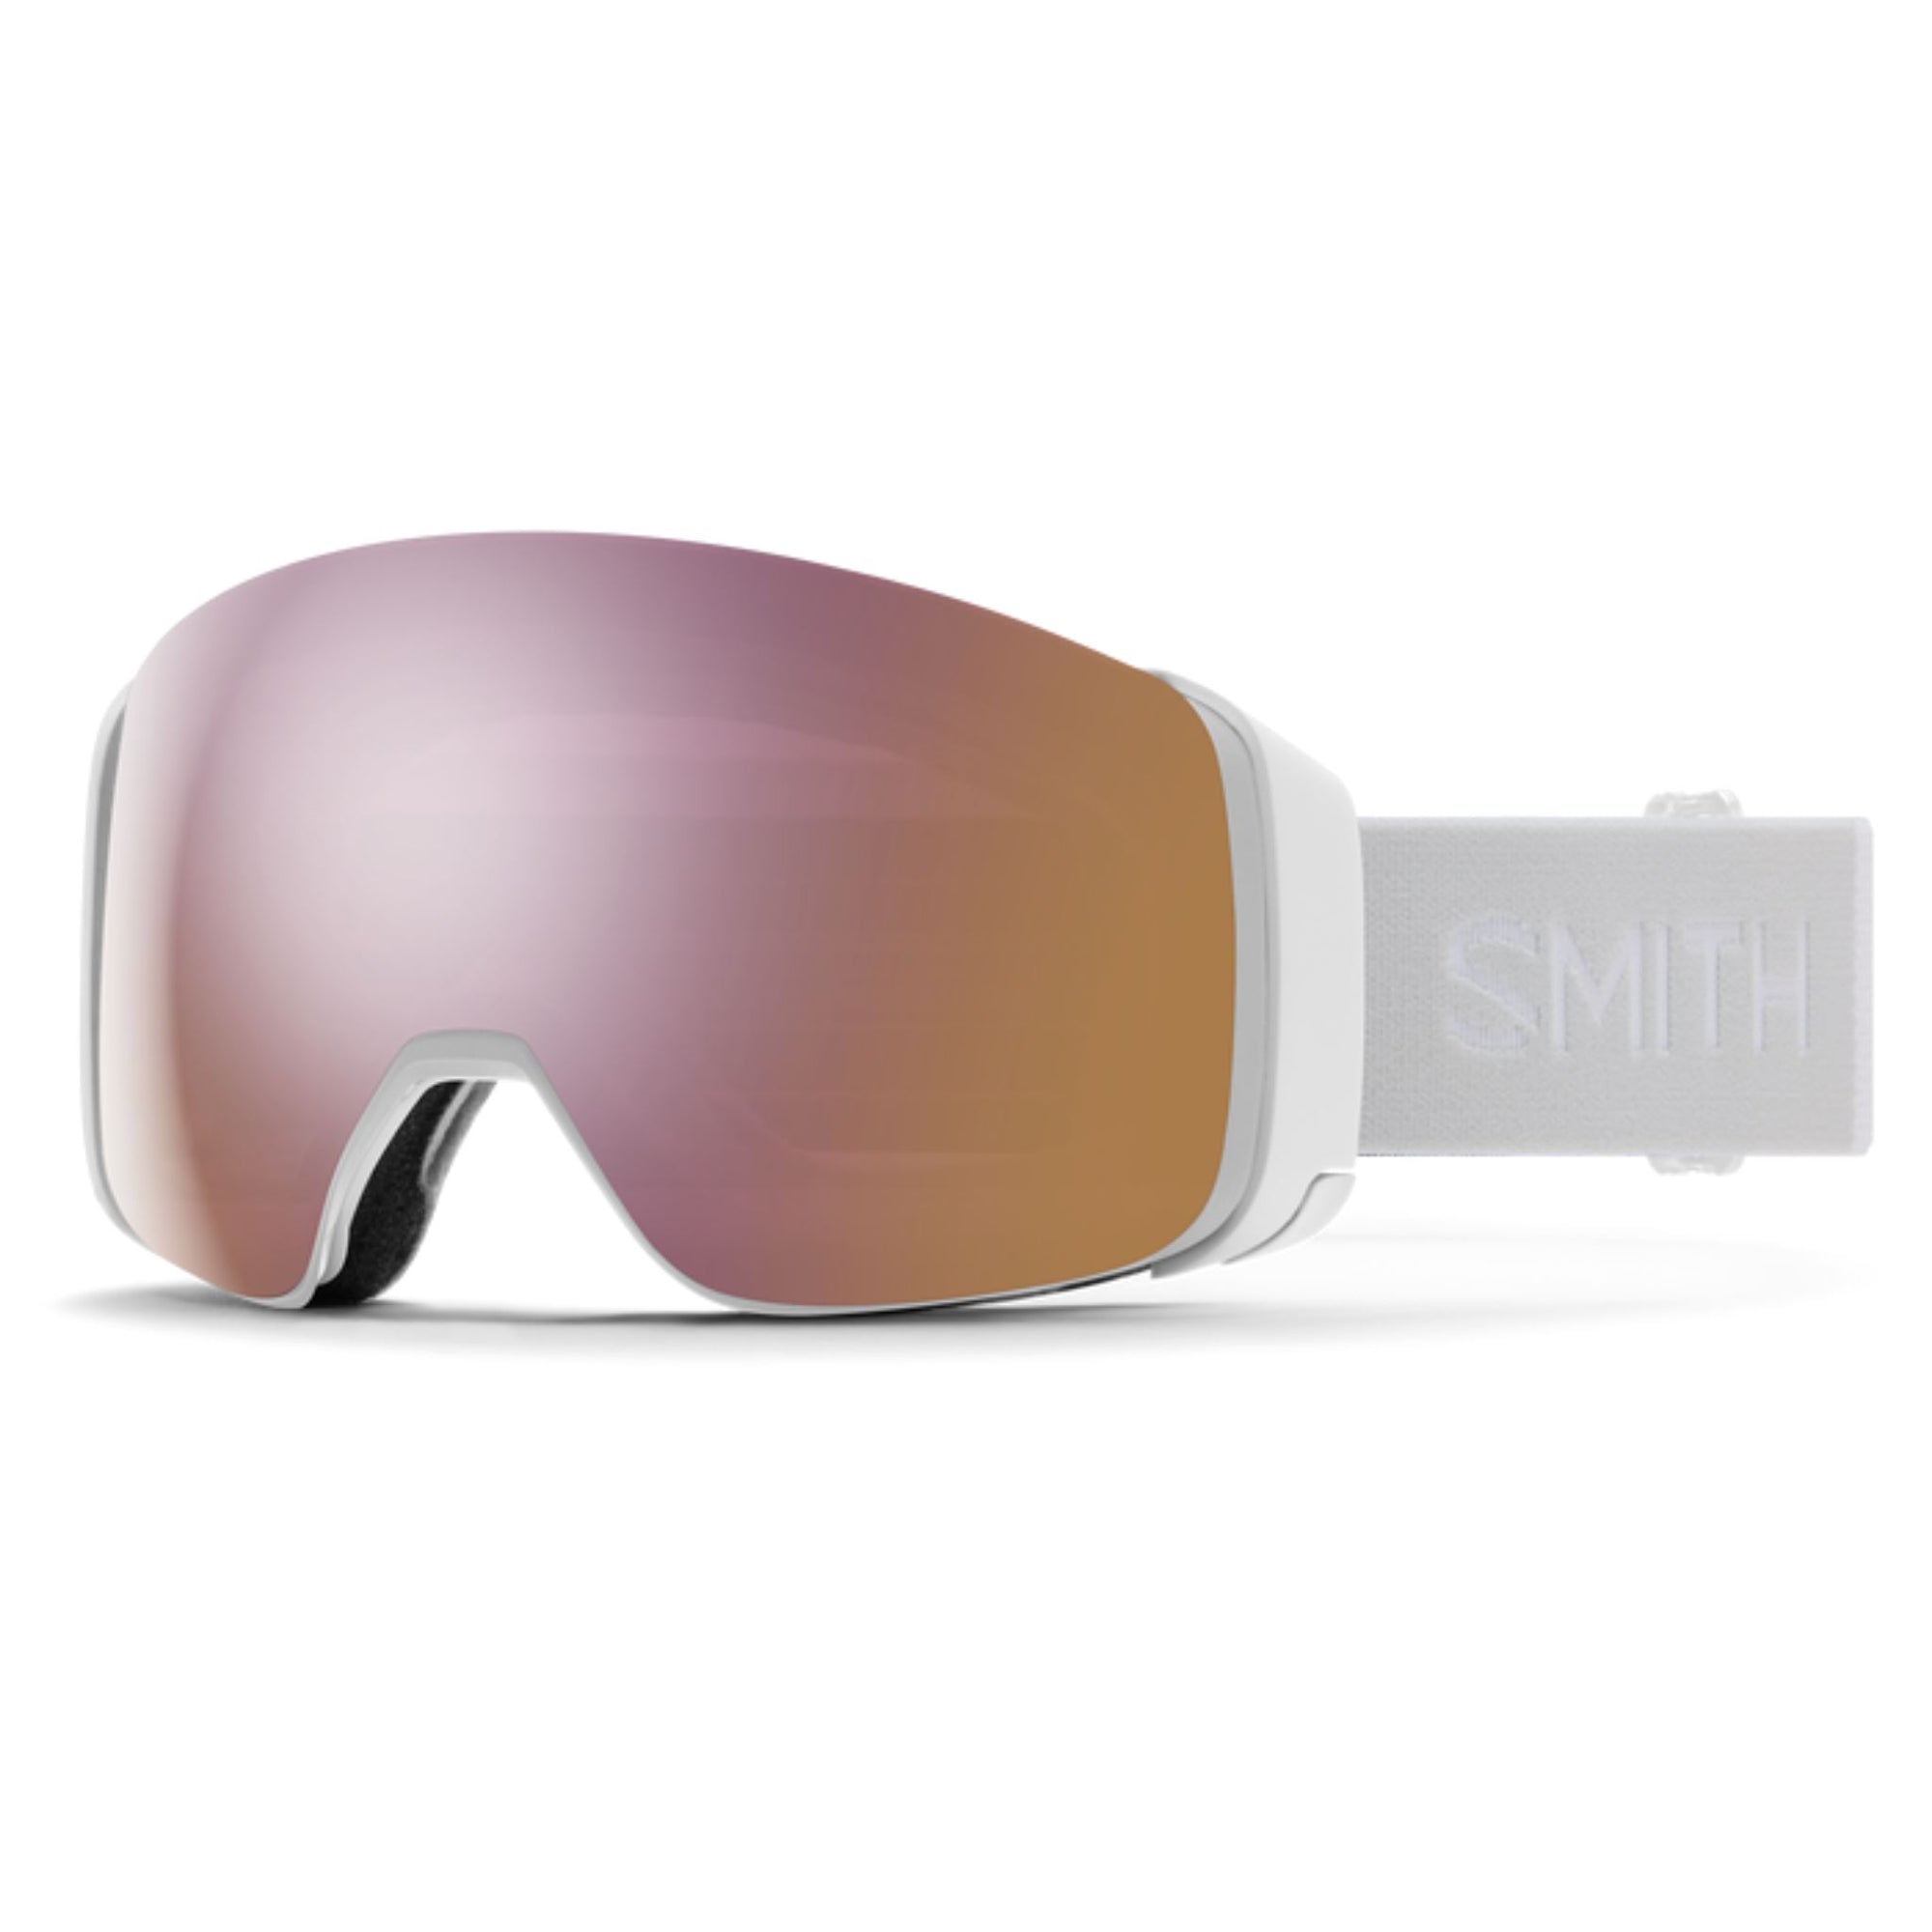 Smith 4D MAG Goggles (Medium Fit) - White Vapor ChromaPop Everyday Rose Gold Mirror Goggles Smith 